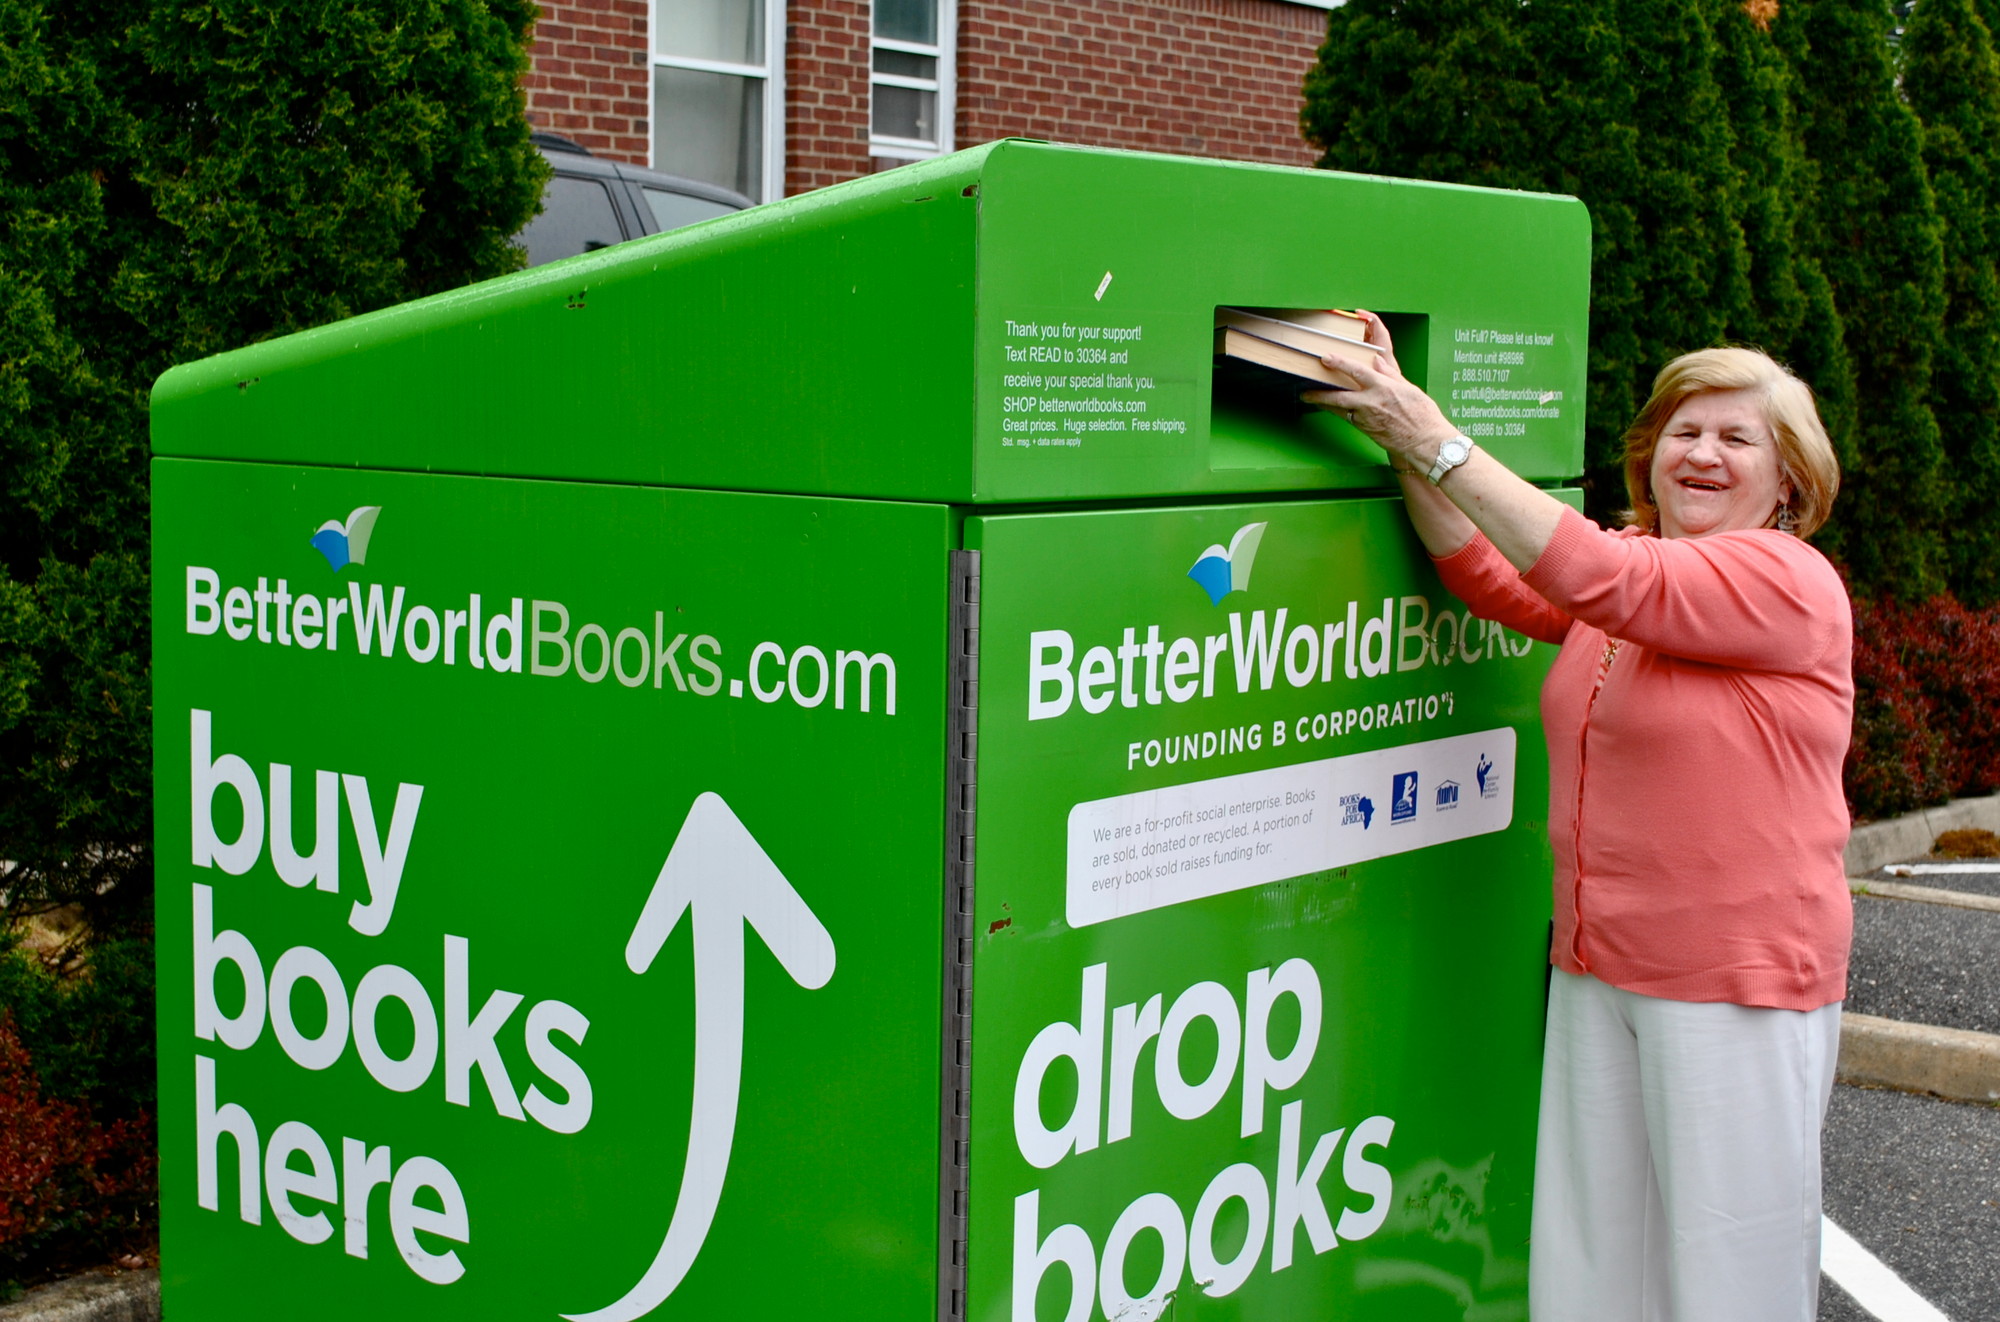 Best world books. World book. Better World. Wider World books. Books World shop.